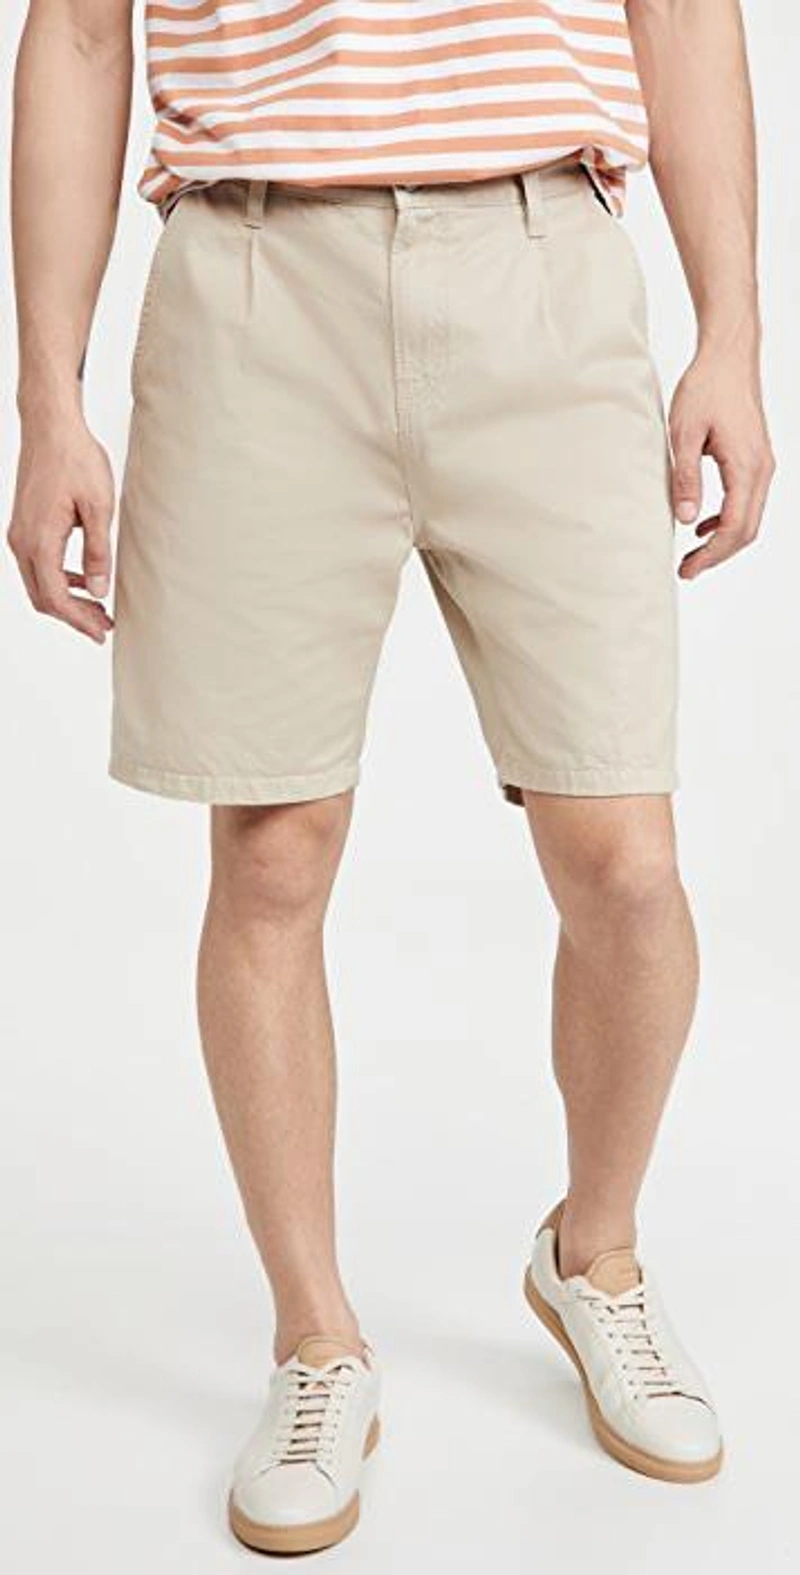 shopbop.com's Posts | 搭配: Carhartt Abbott Shorts In Wall